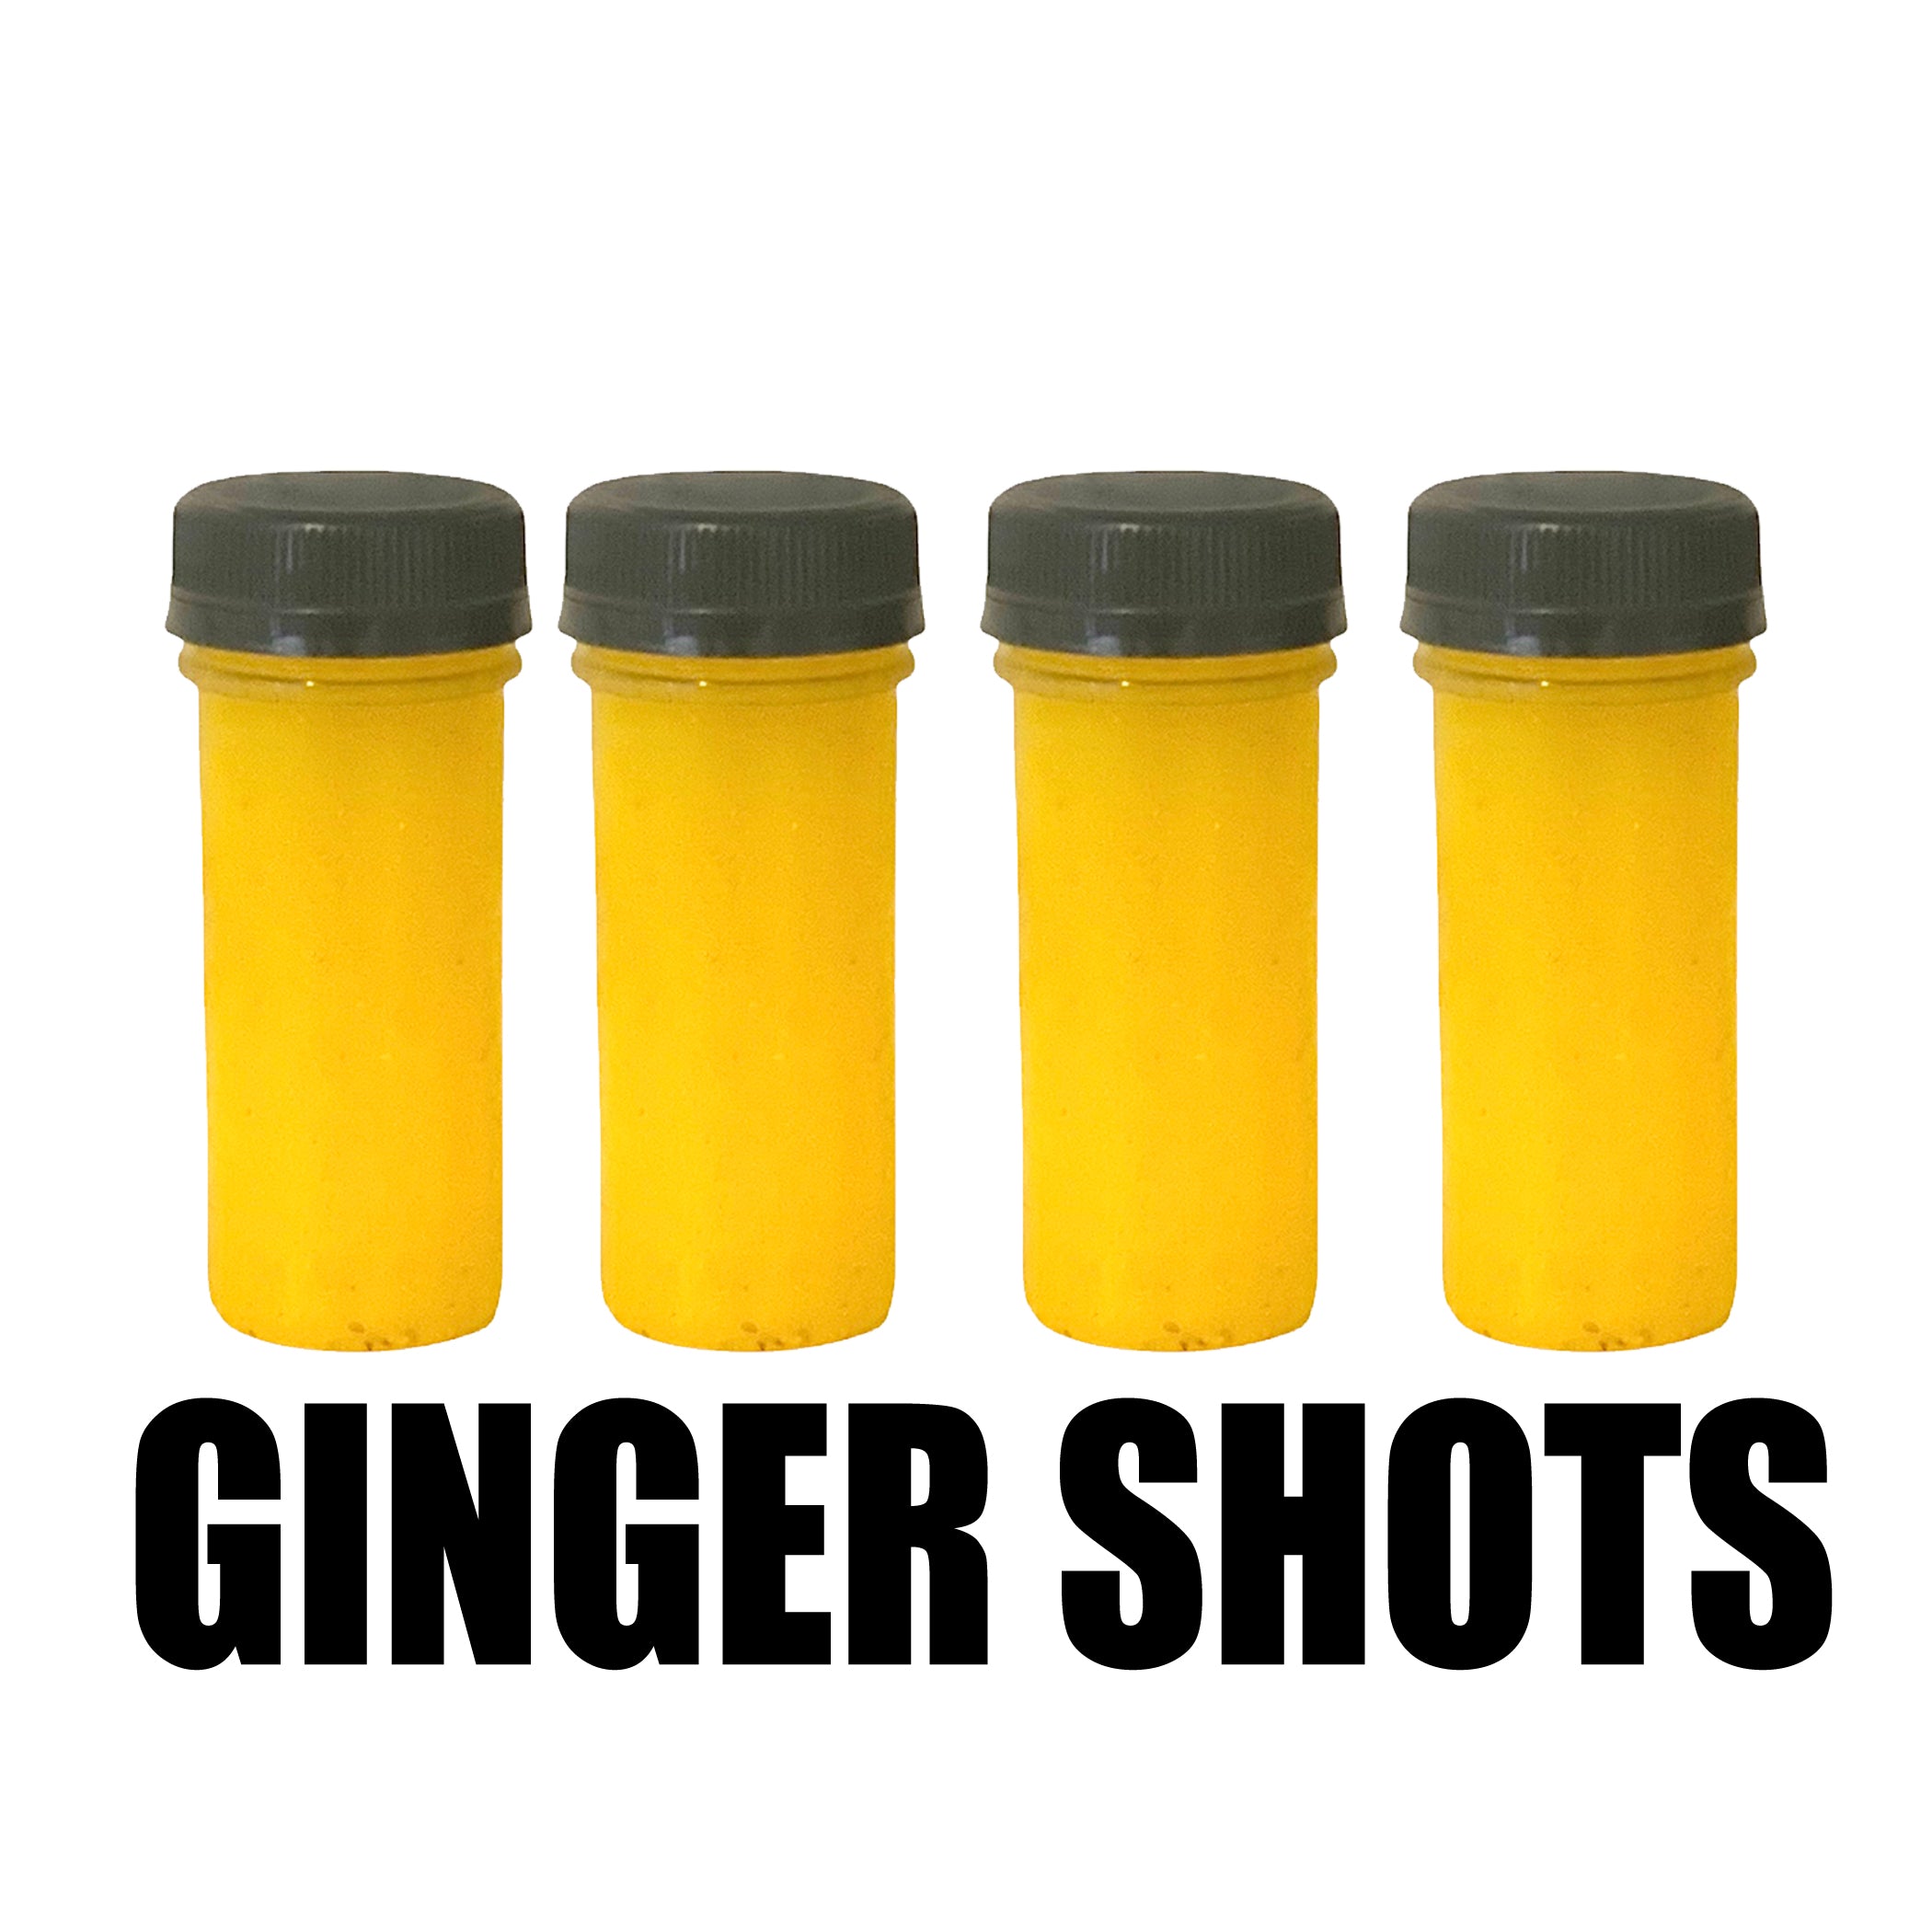 Fighter Shots Ginger + Pomegranate Shot + Vitamin D (12x60ml) – fightershots